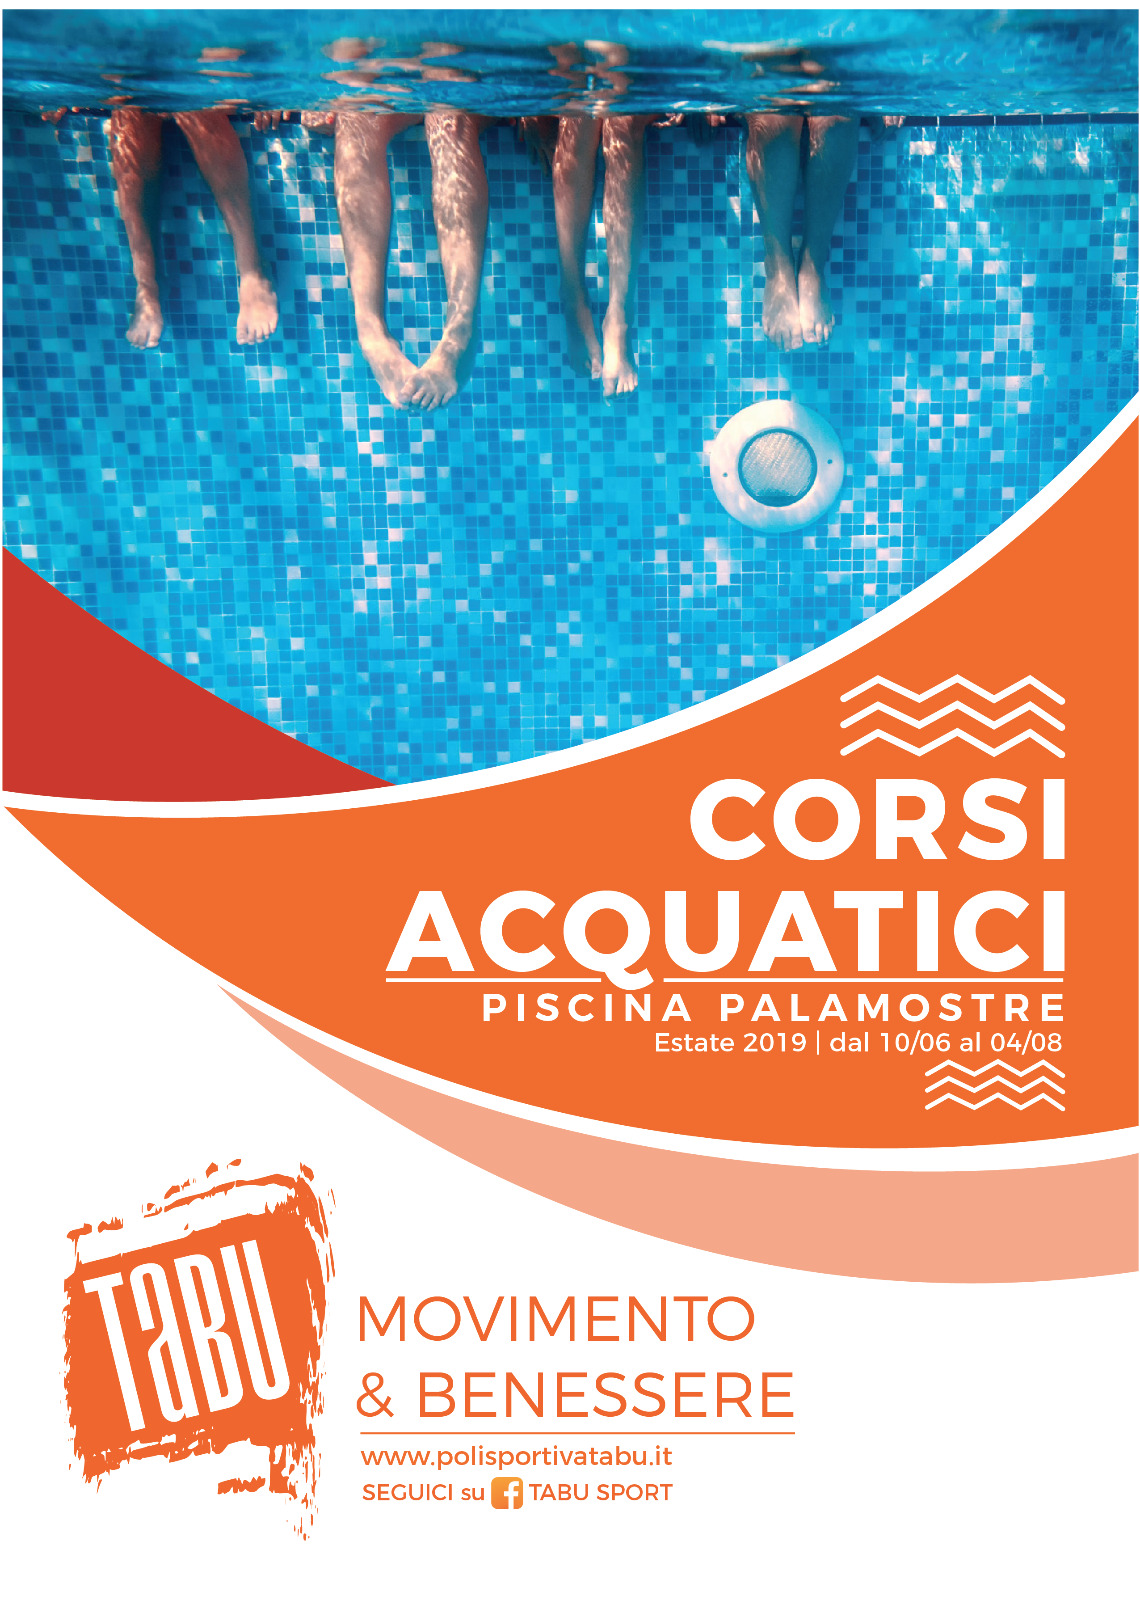 Corsi acquatici a Udine estate 2019